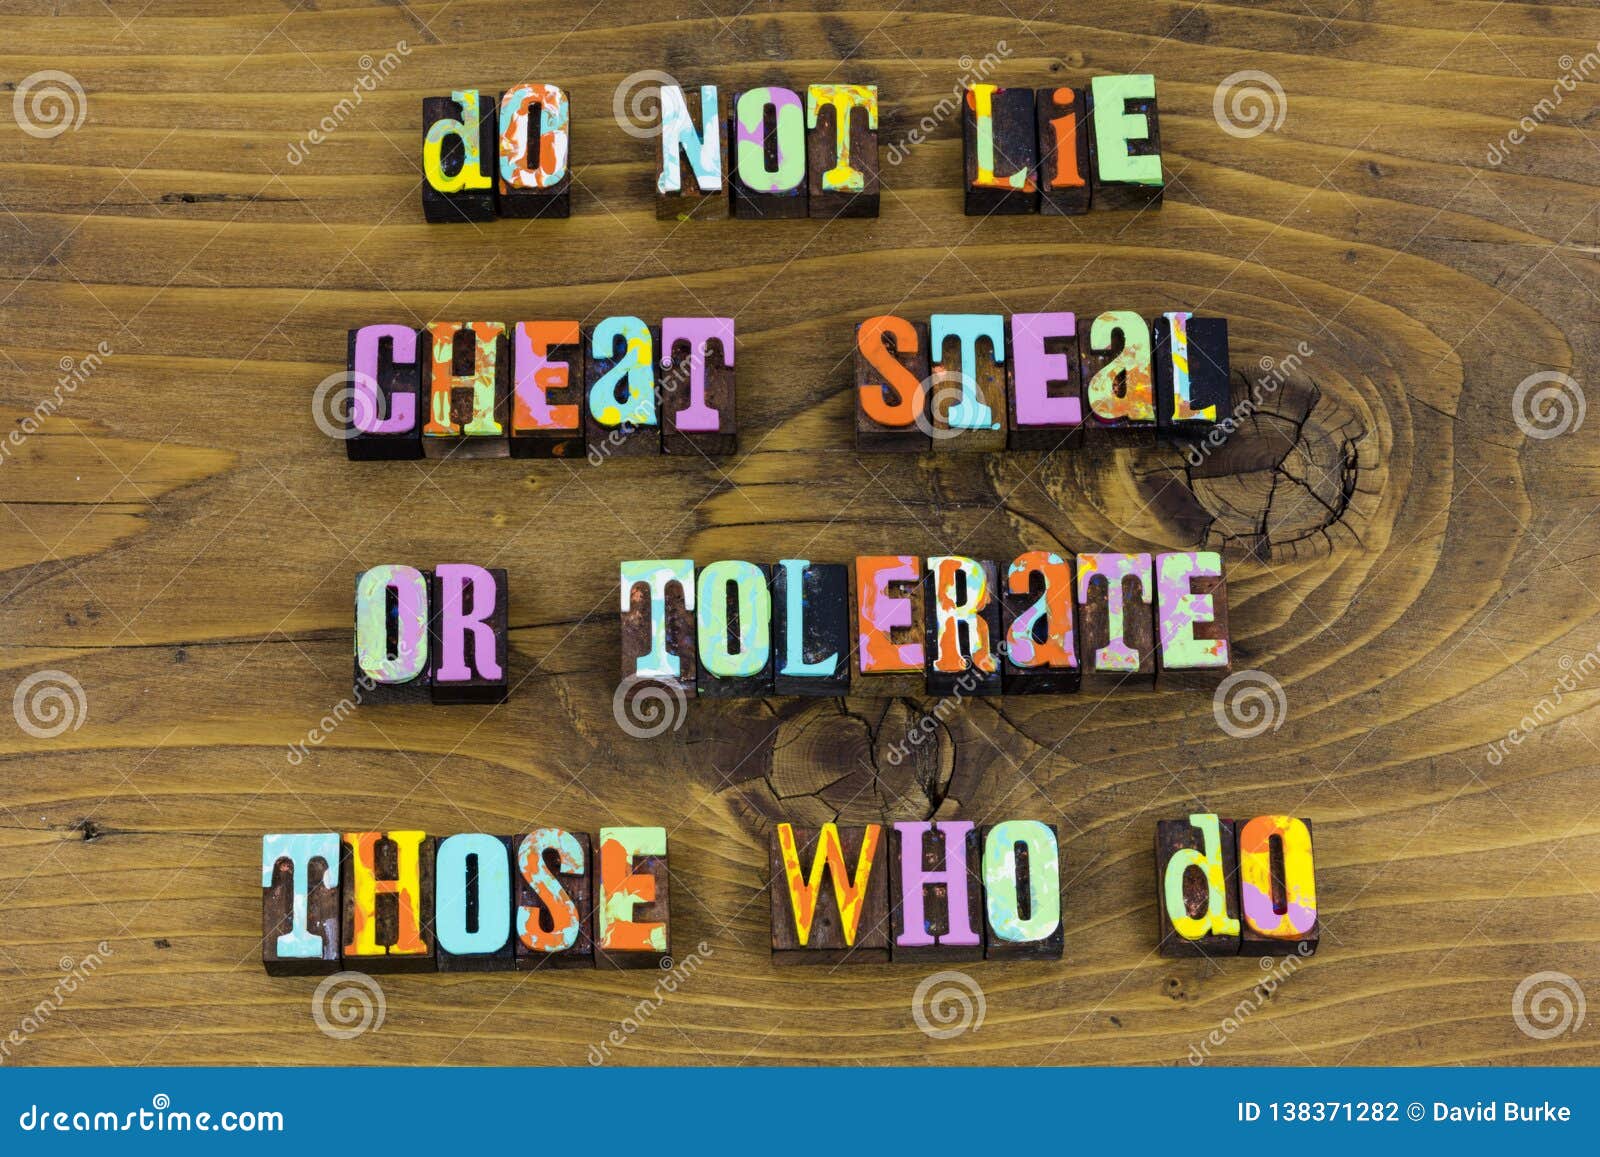 lie cheat steal fraud truth dishonest deception honesty ethics